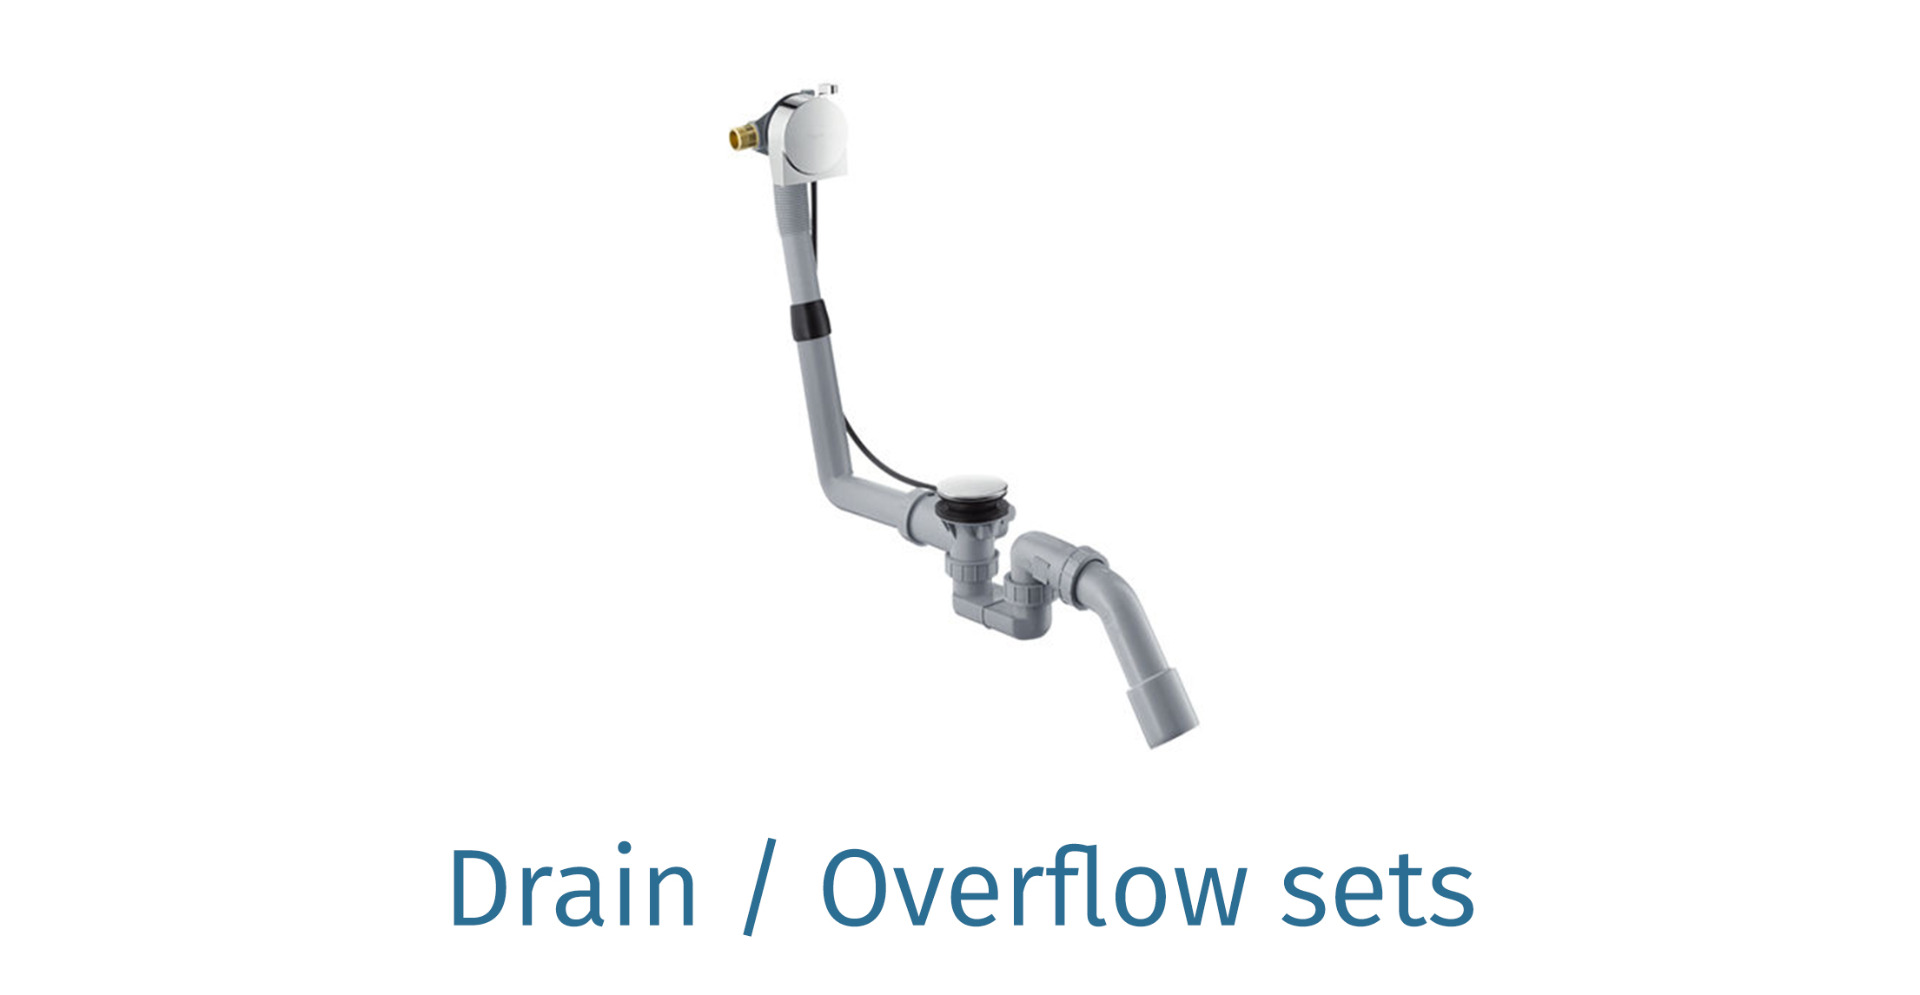 Drain overflow sets